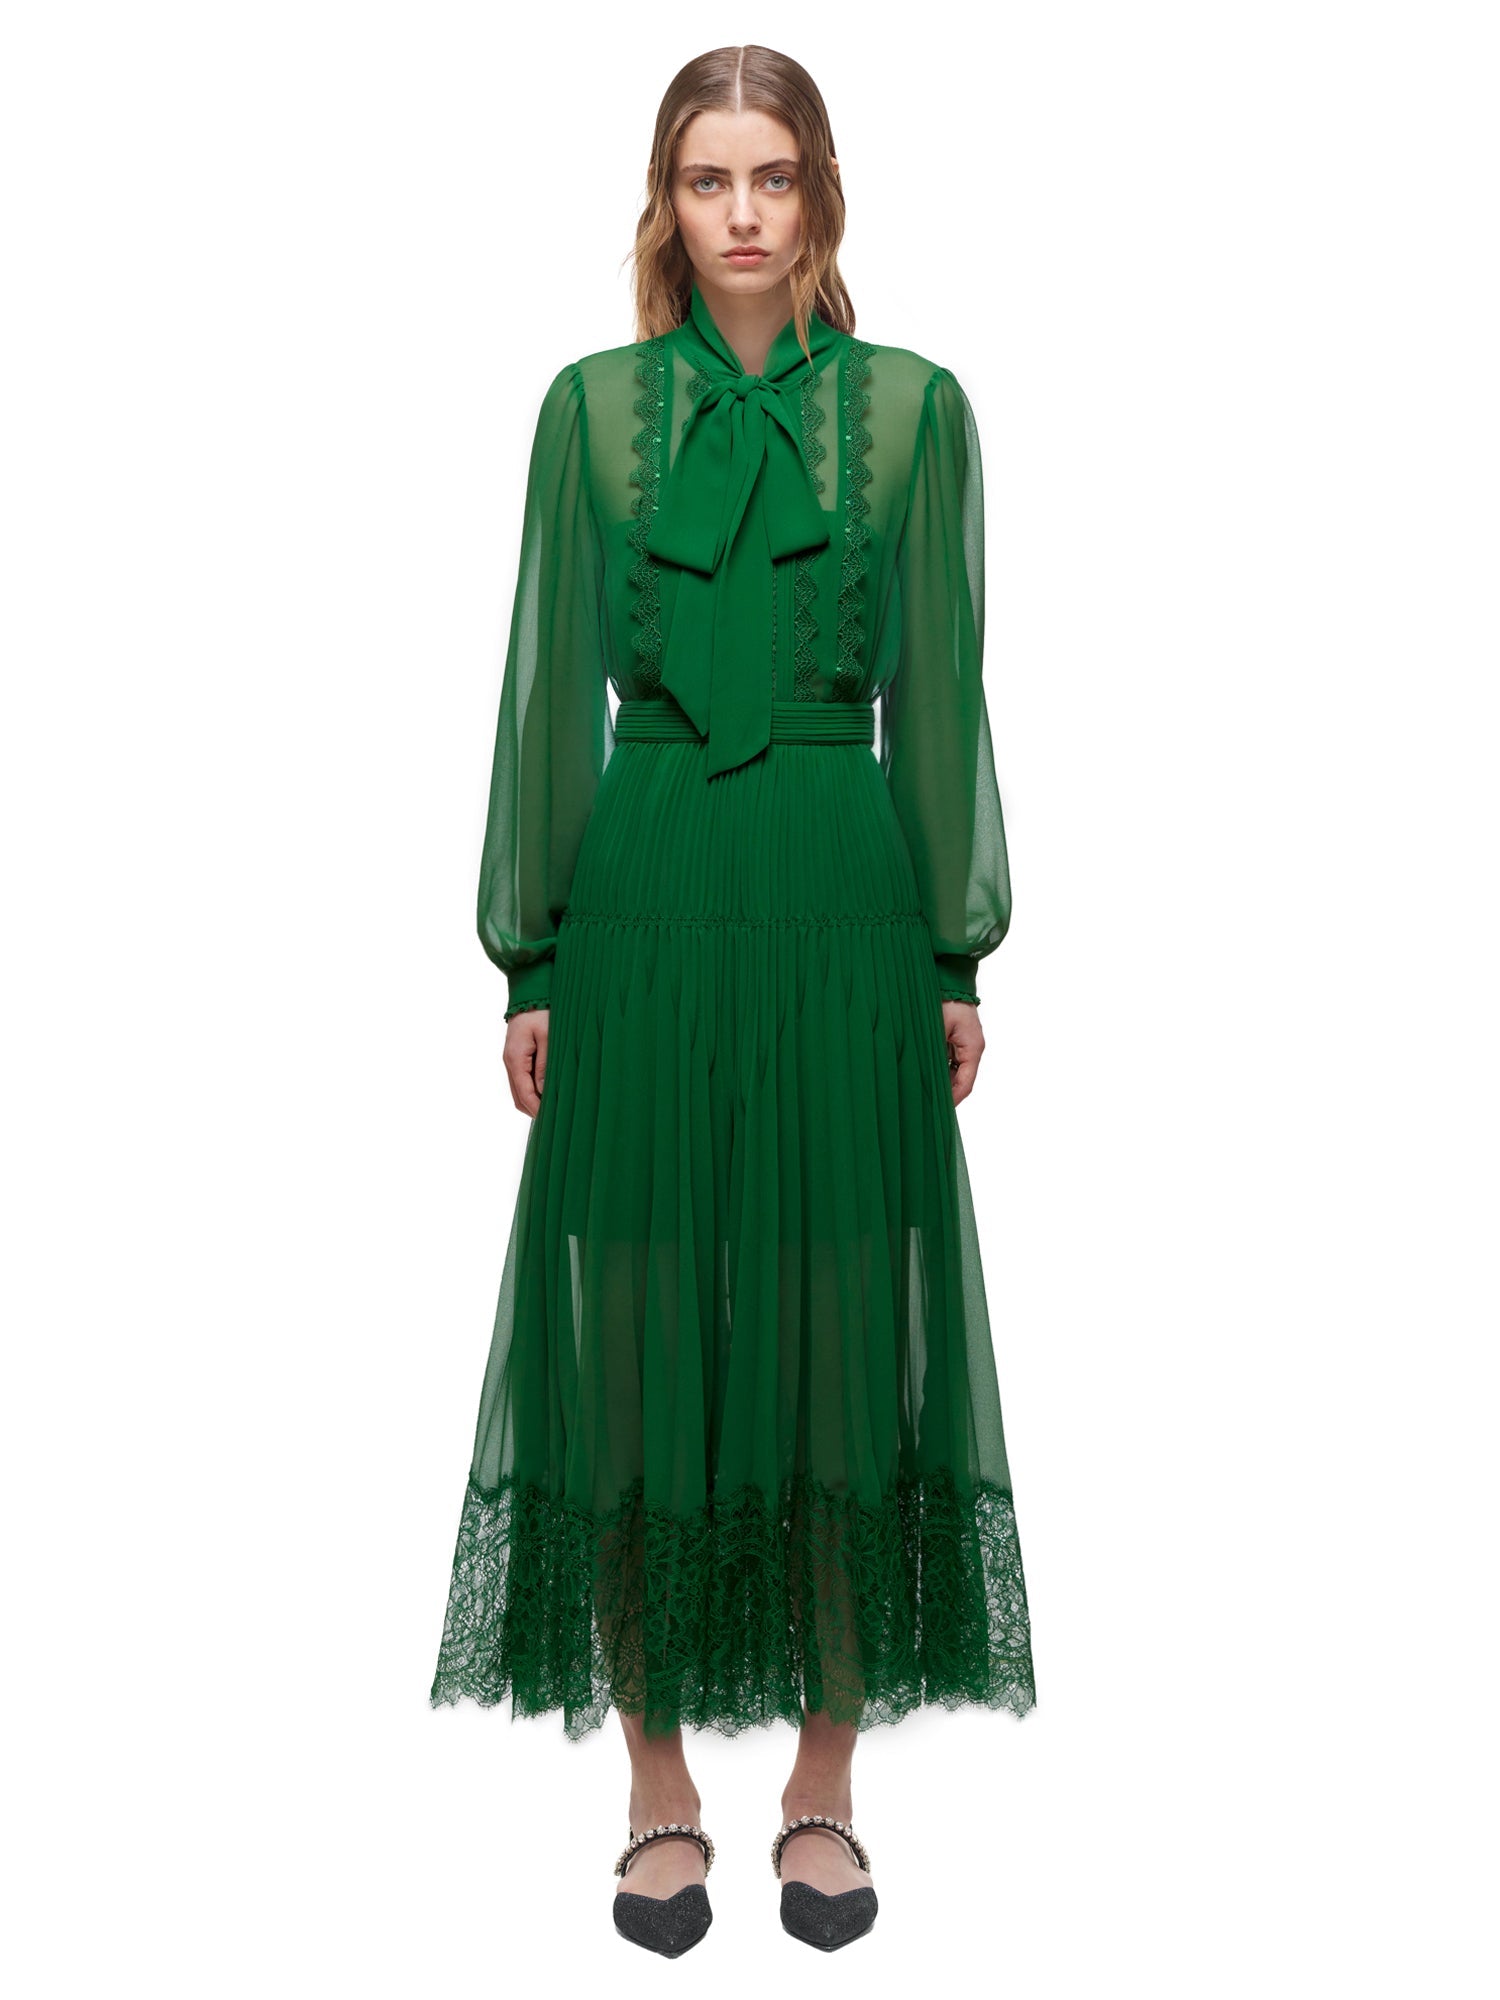 A woman wearing the Green Chiffon Trimmed Dress